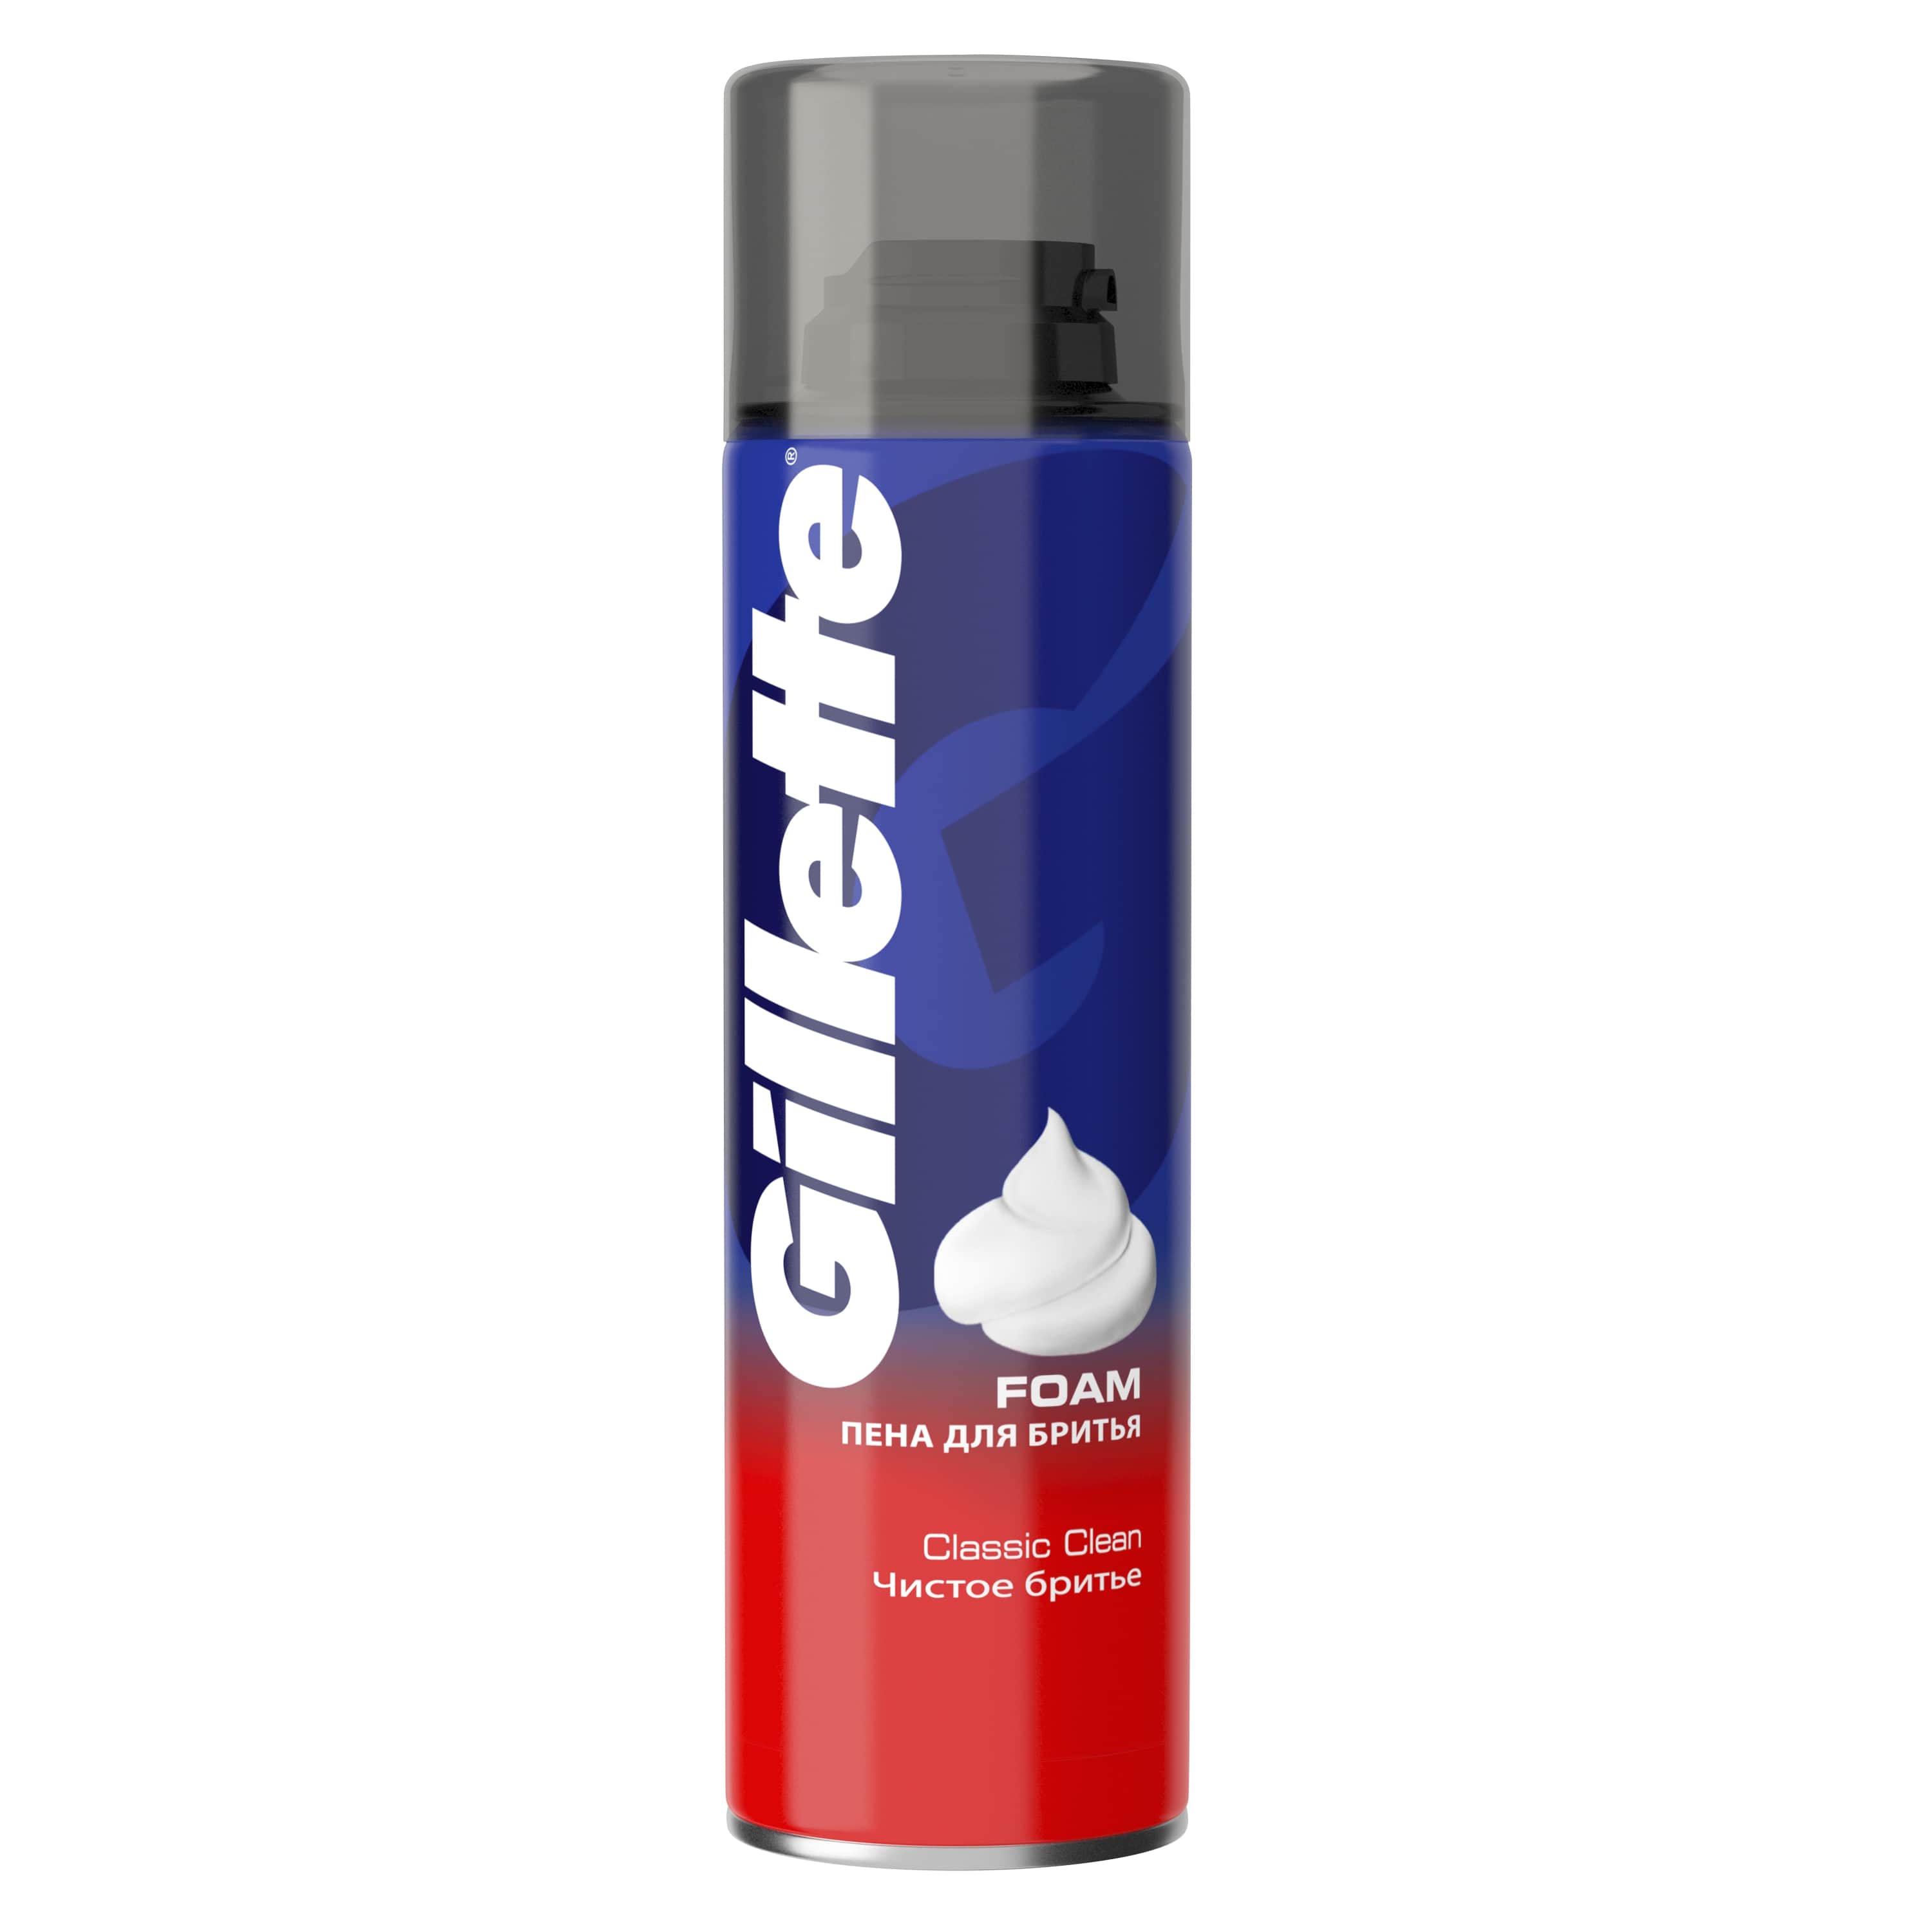 Gillette пена для бритья чистое бритье 200 мл